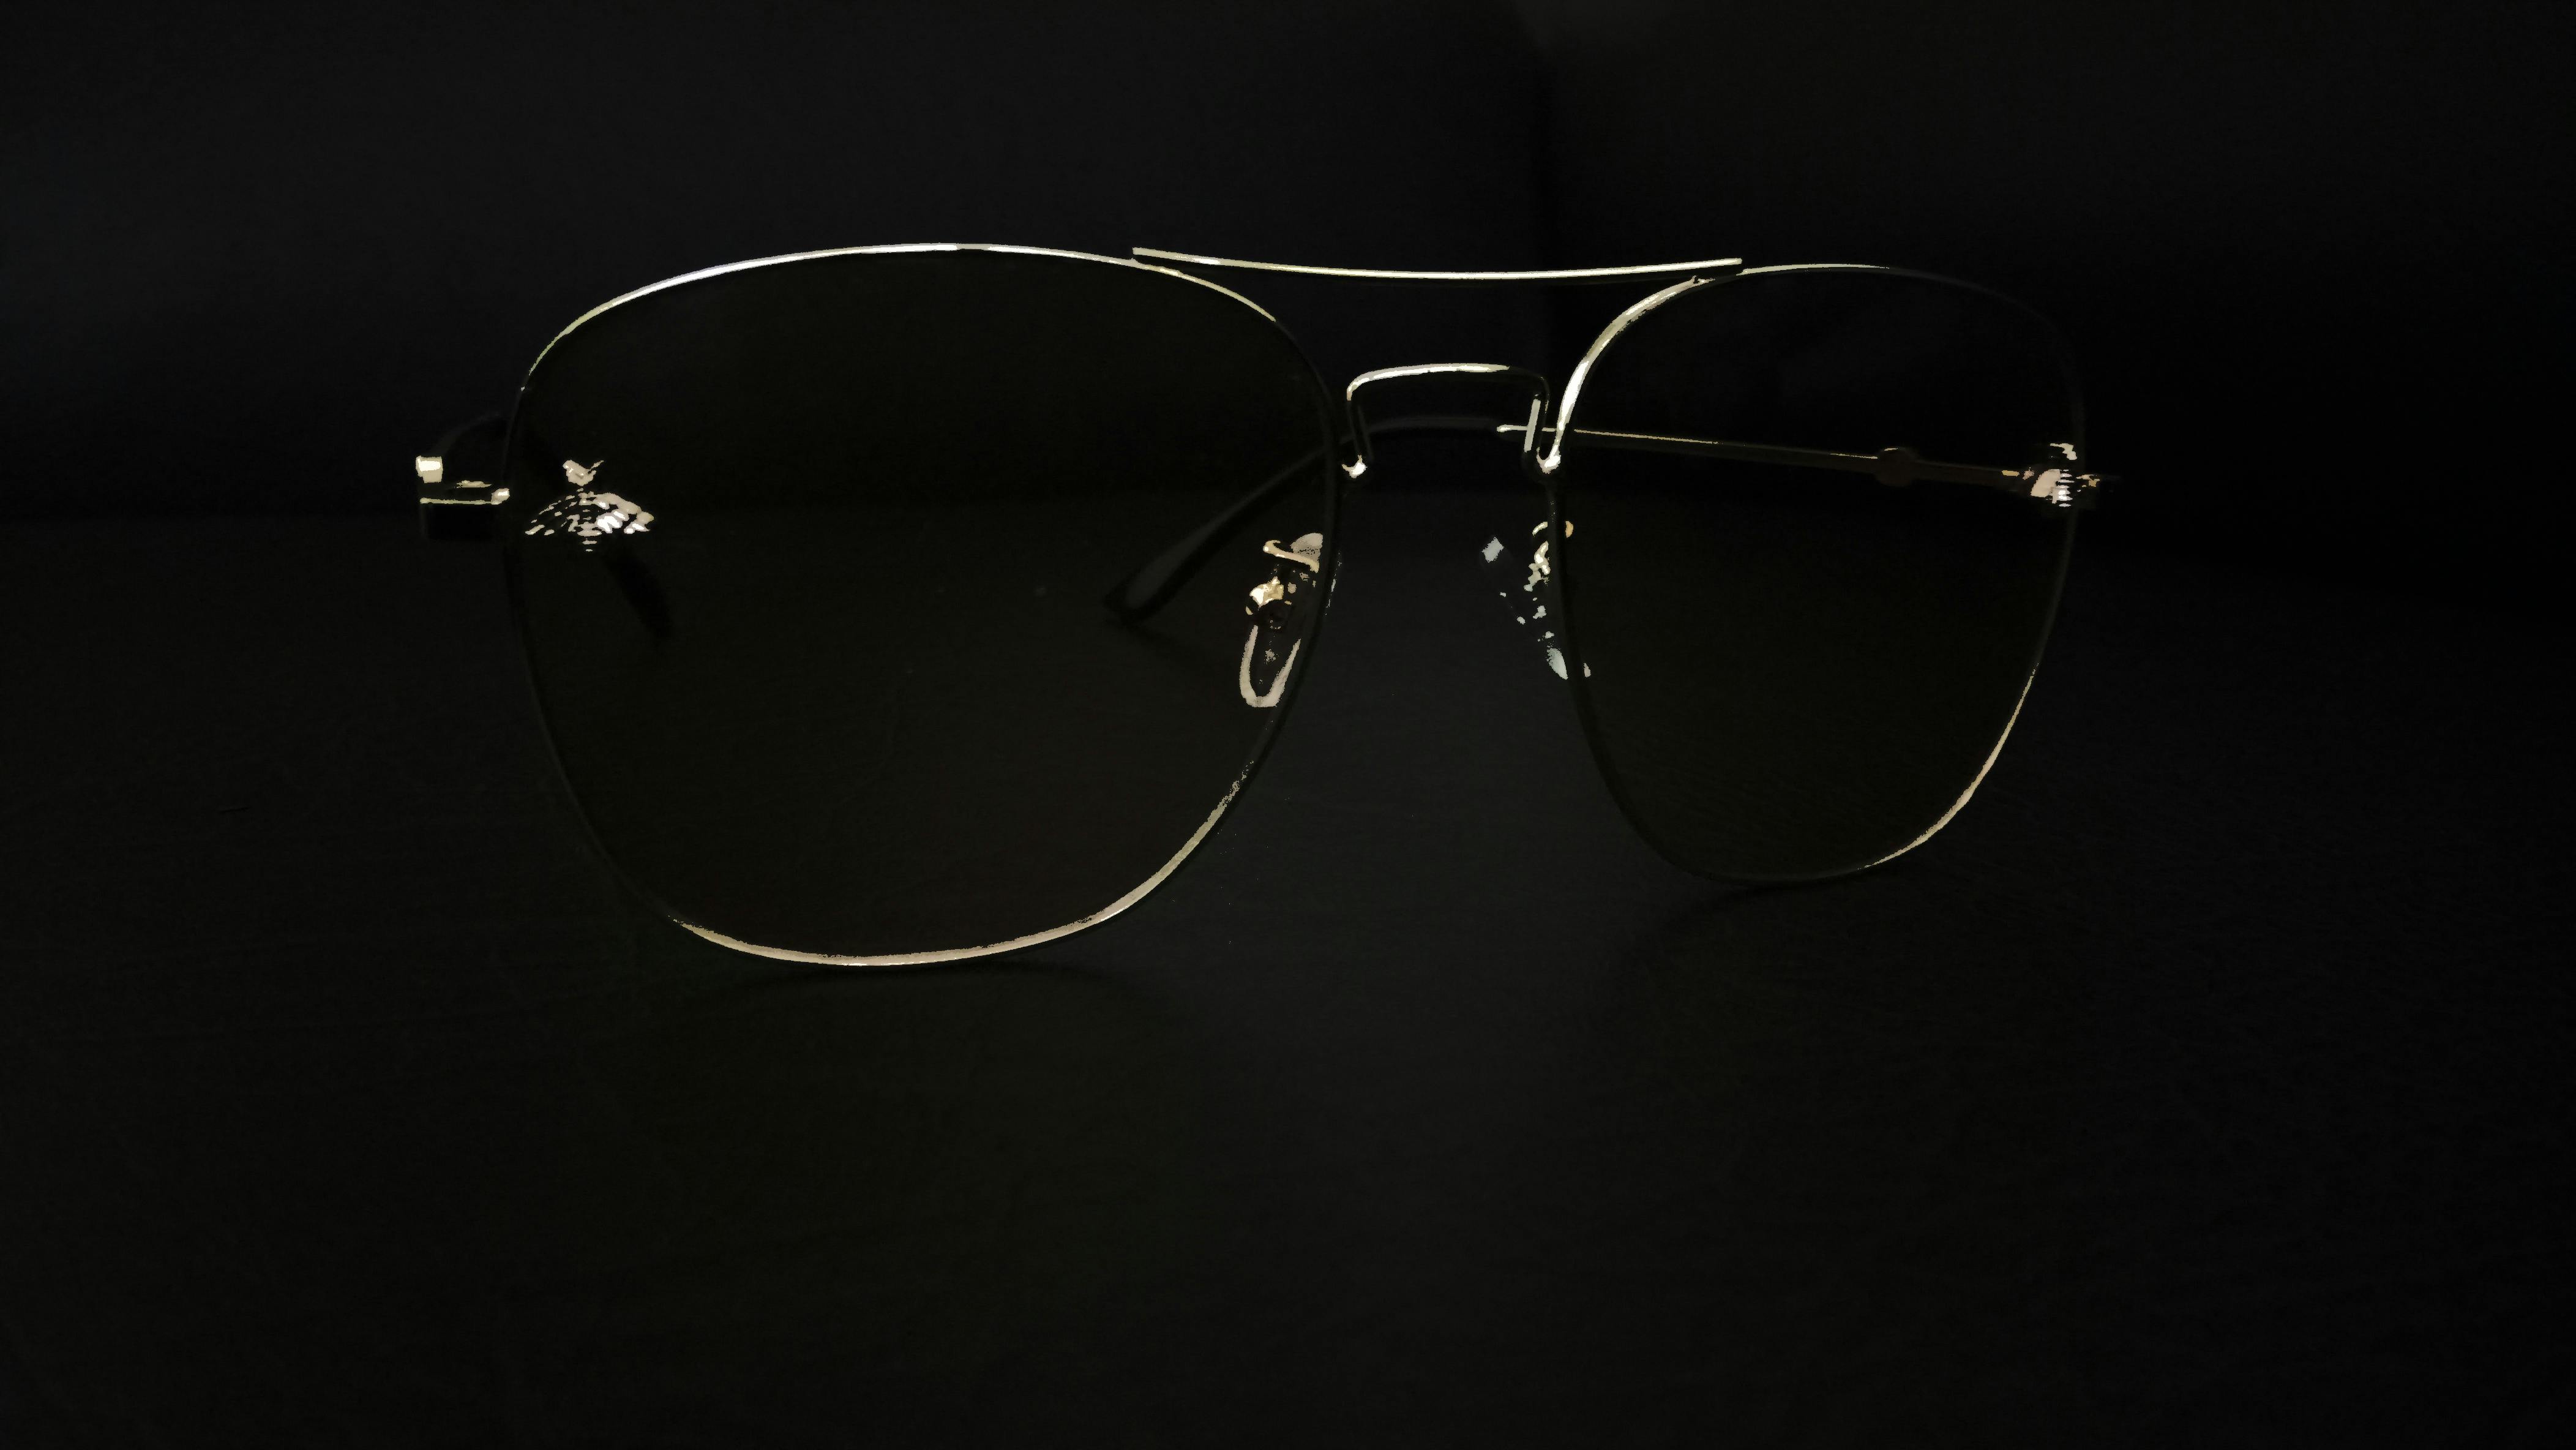 Free stock photo of black and white, sun glasses